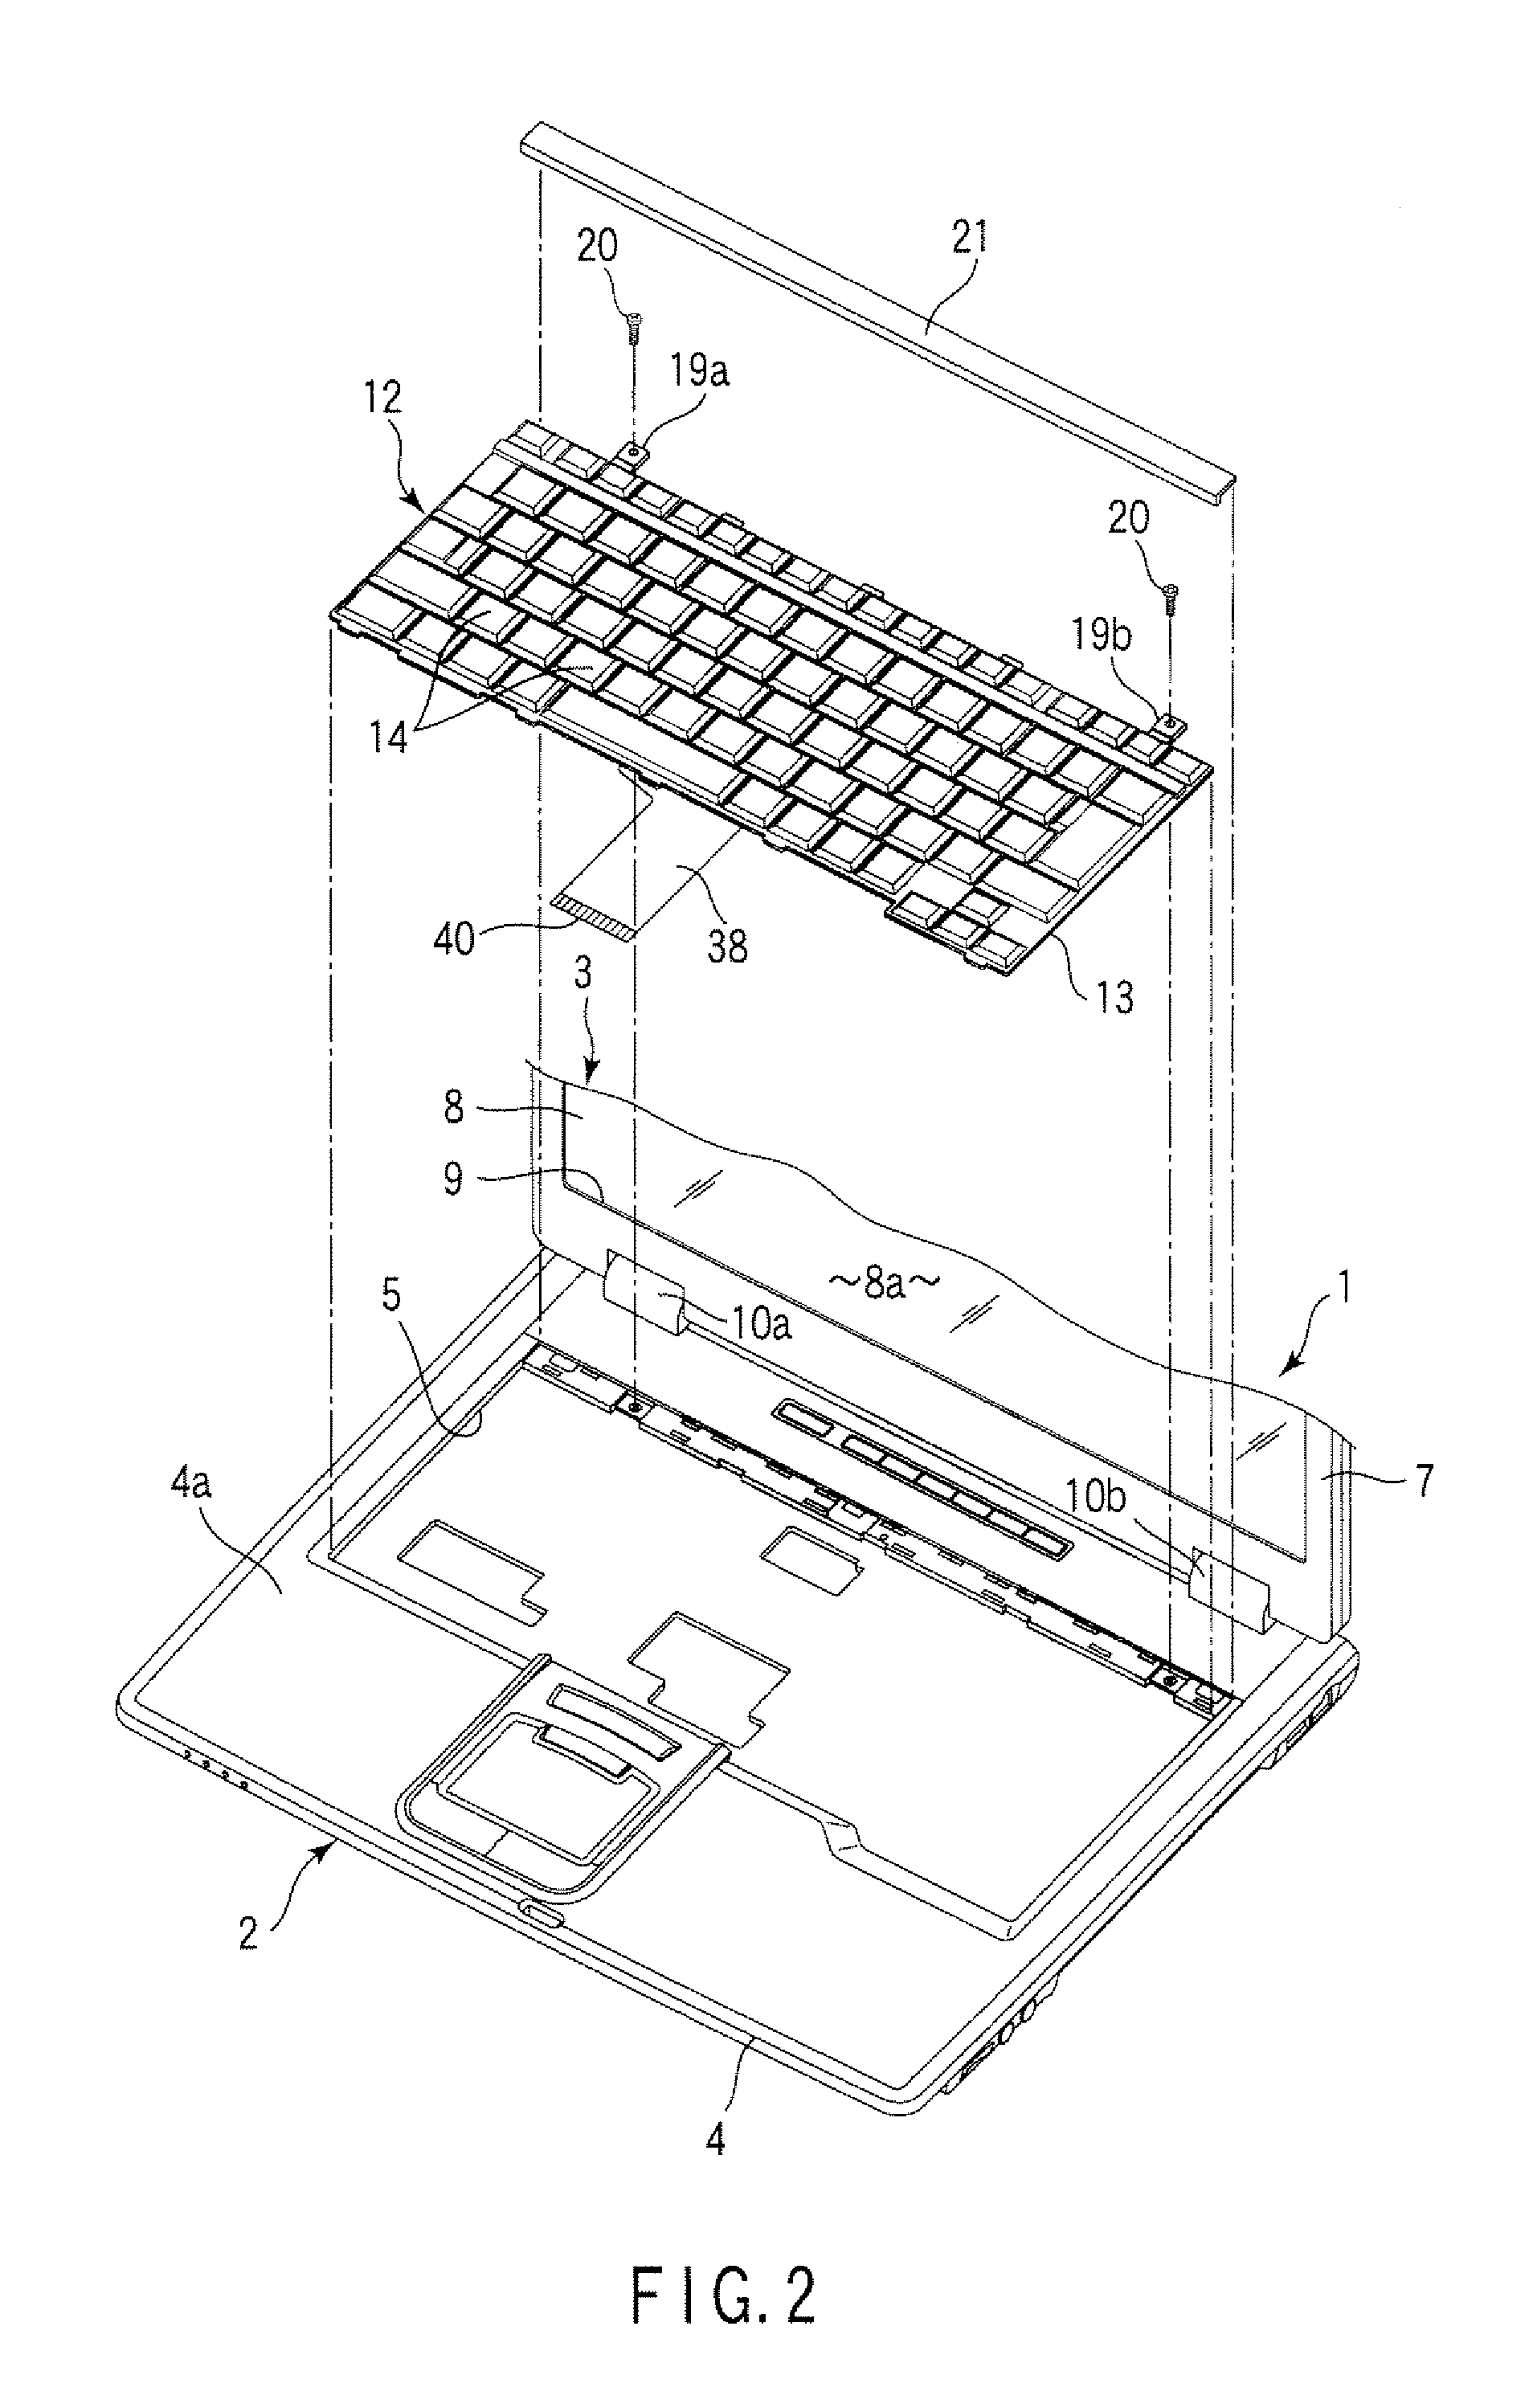 Keyboard, Lighting Module for Keyboard and Electronic Apparatus